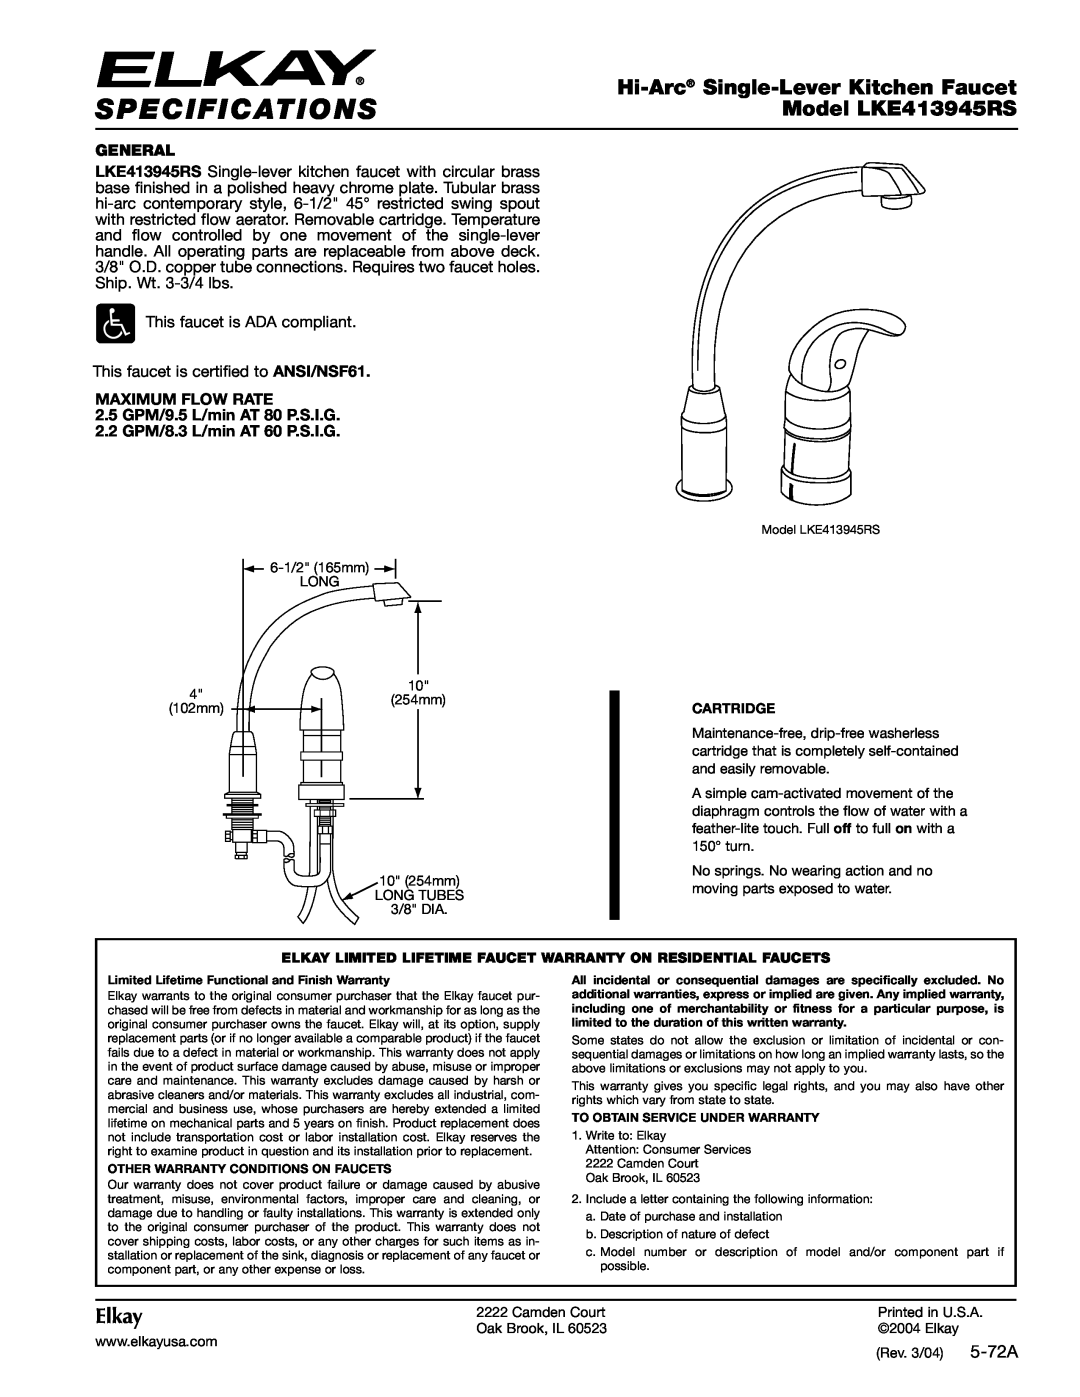 Elkay specifications Specifications, Hi-Arc Single-LeverKitchen Faucet, Model LKE413945RS, Elkay, 5-72A, General 